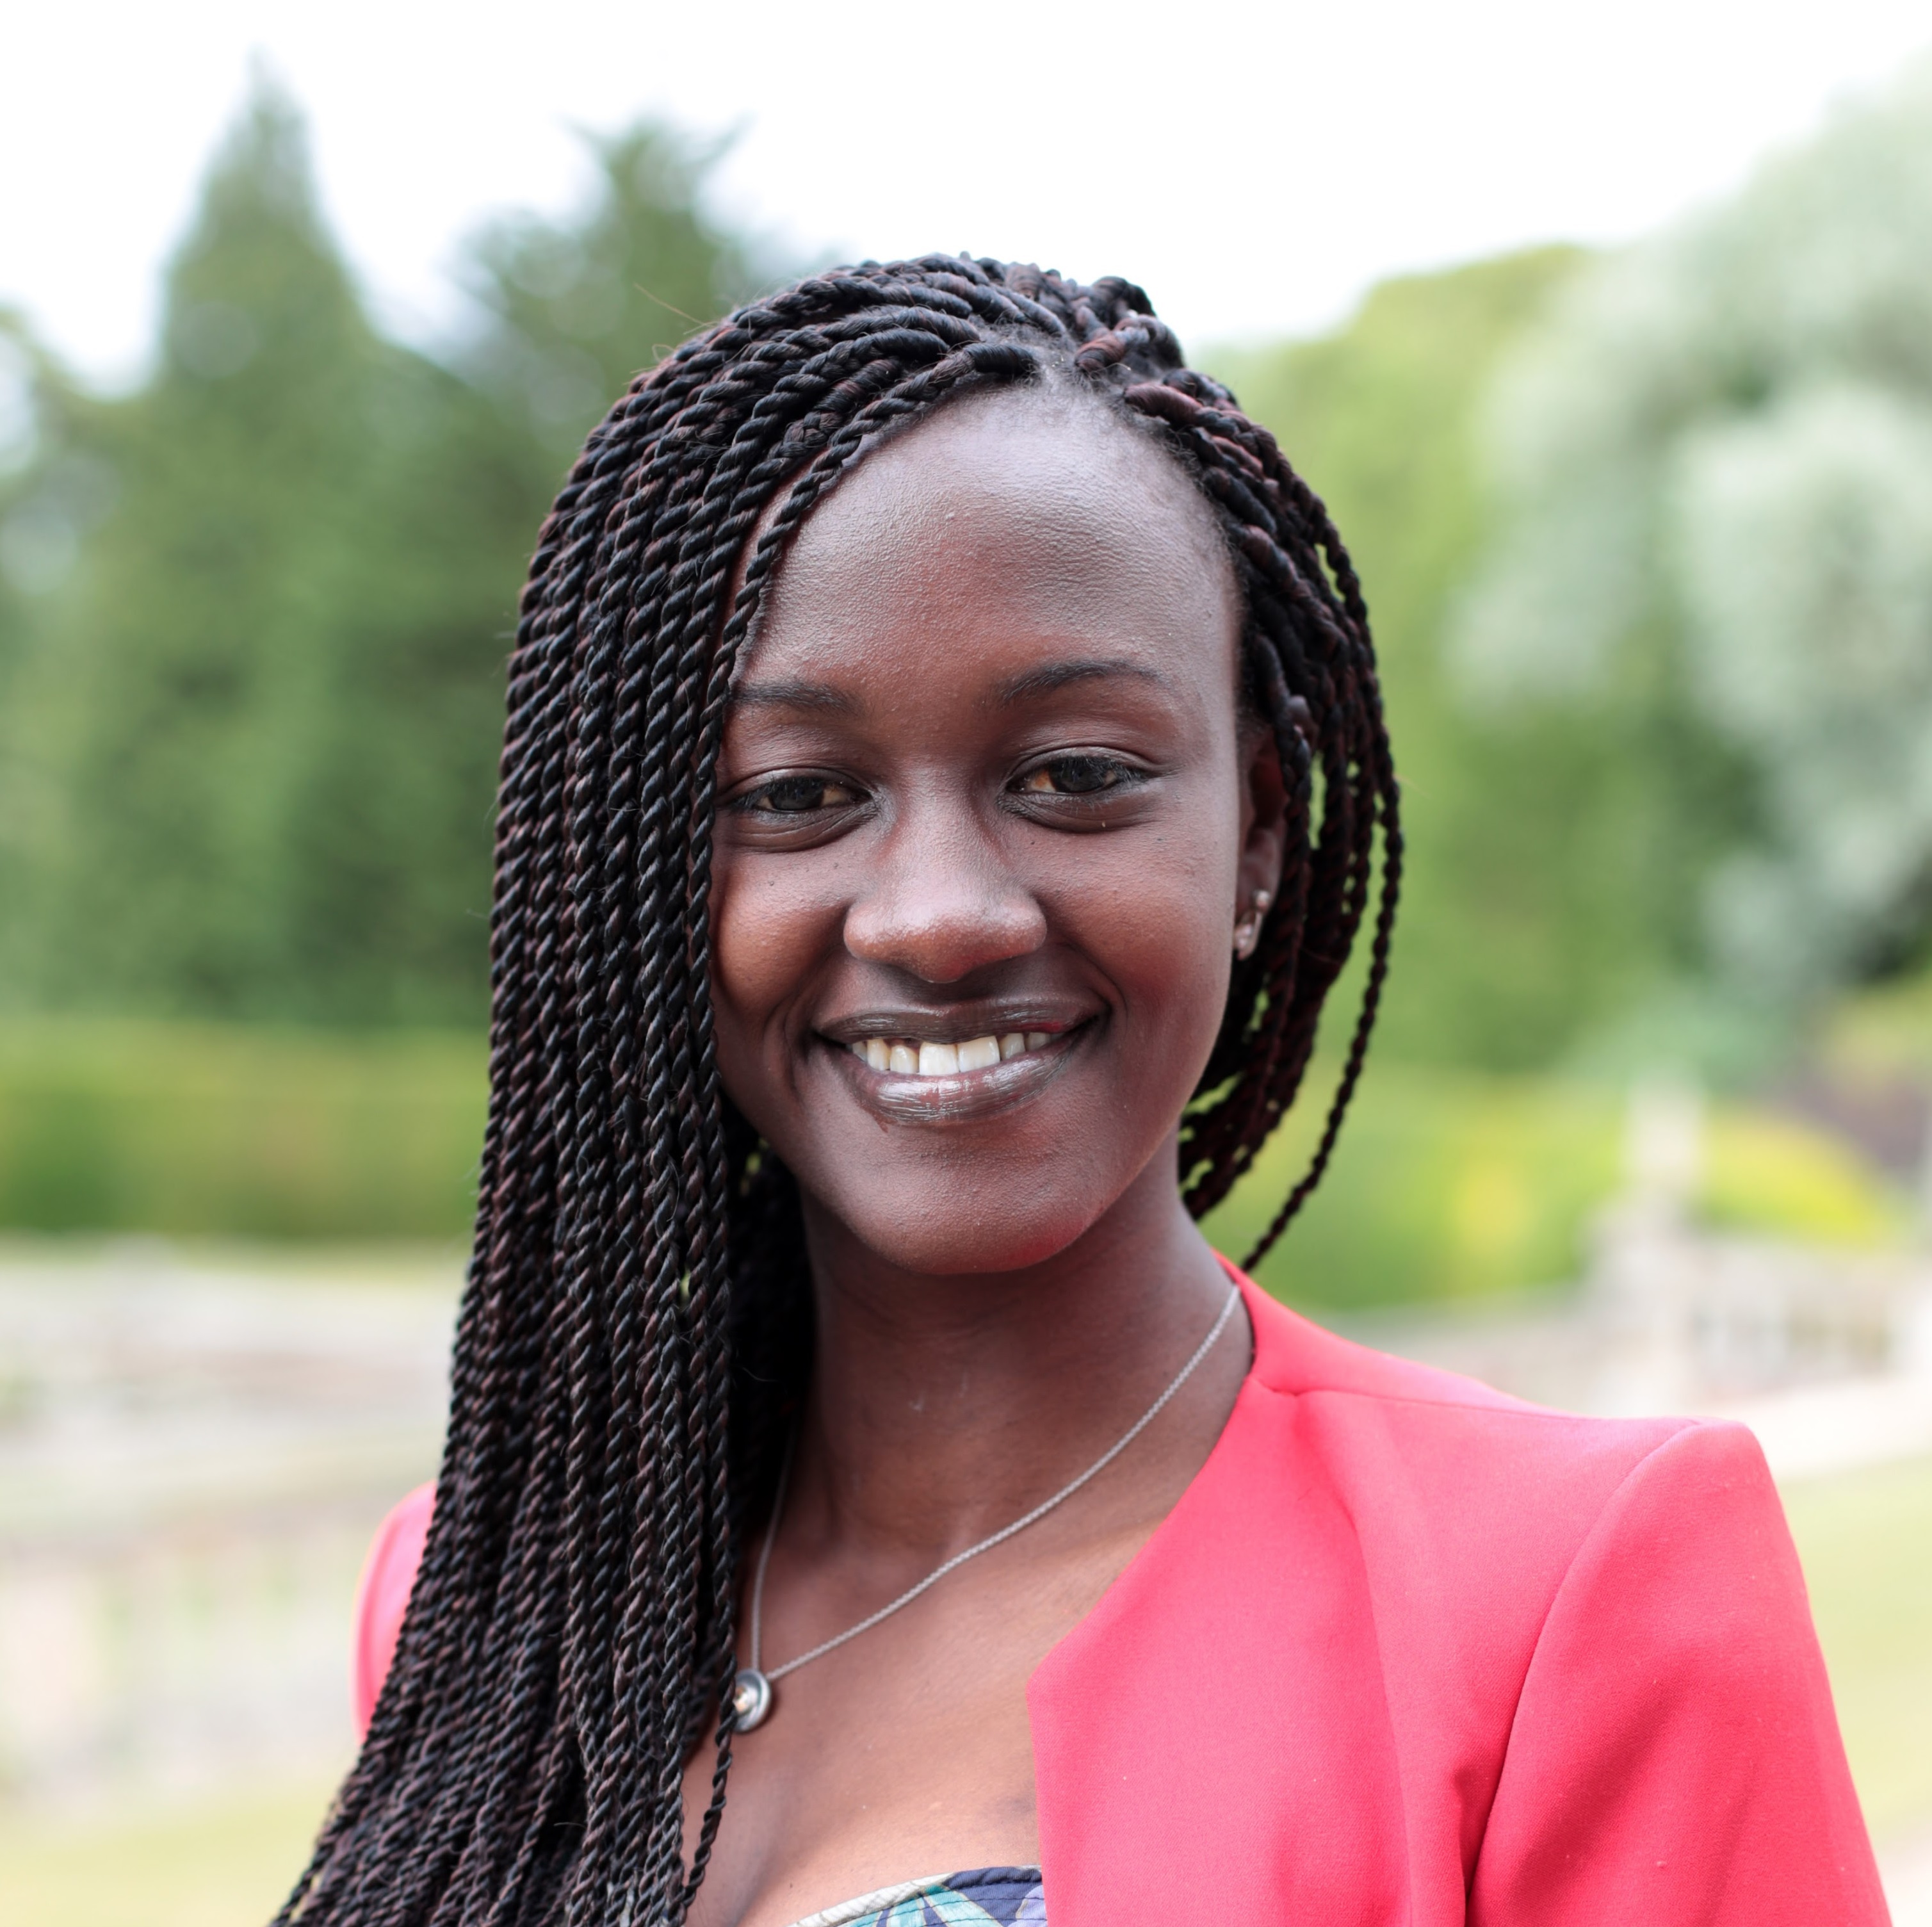 Kellya Uwiragiye 2017 Queen's Young Leader from Rwanda